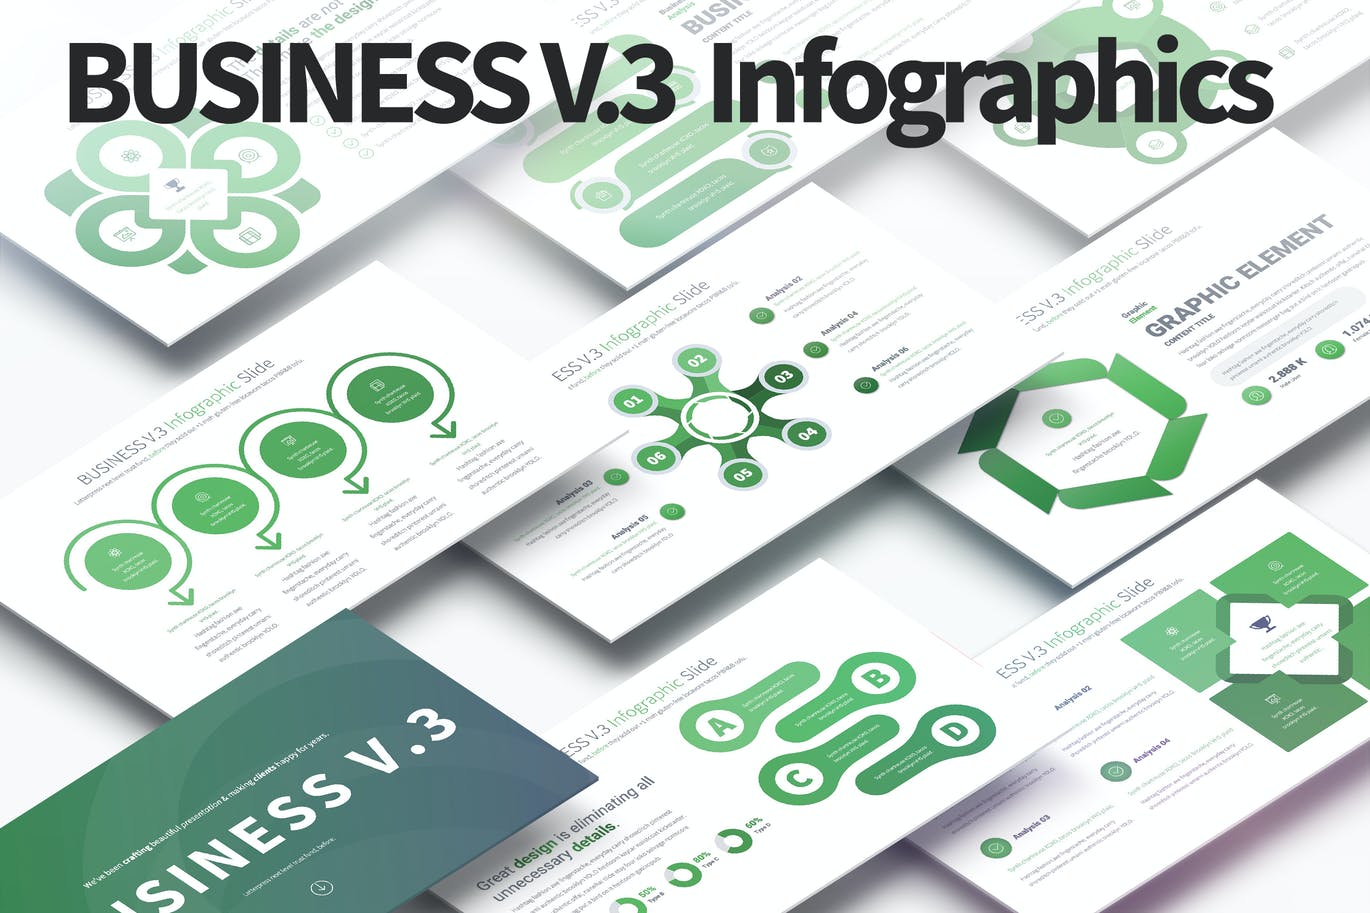 BUSINESS V.3 - PowerPoint Infographics Slides